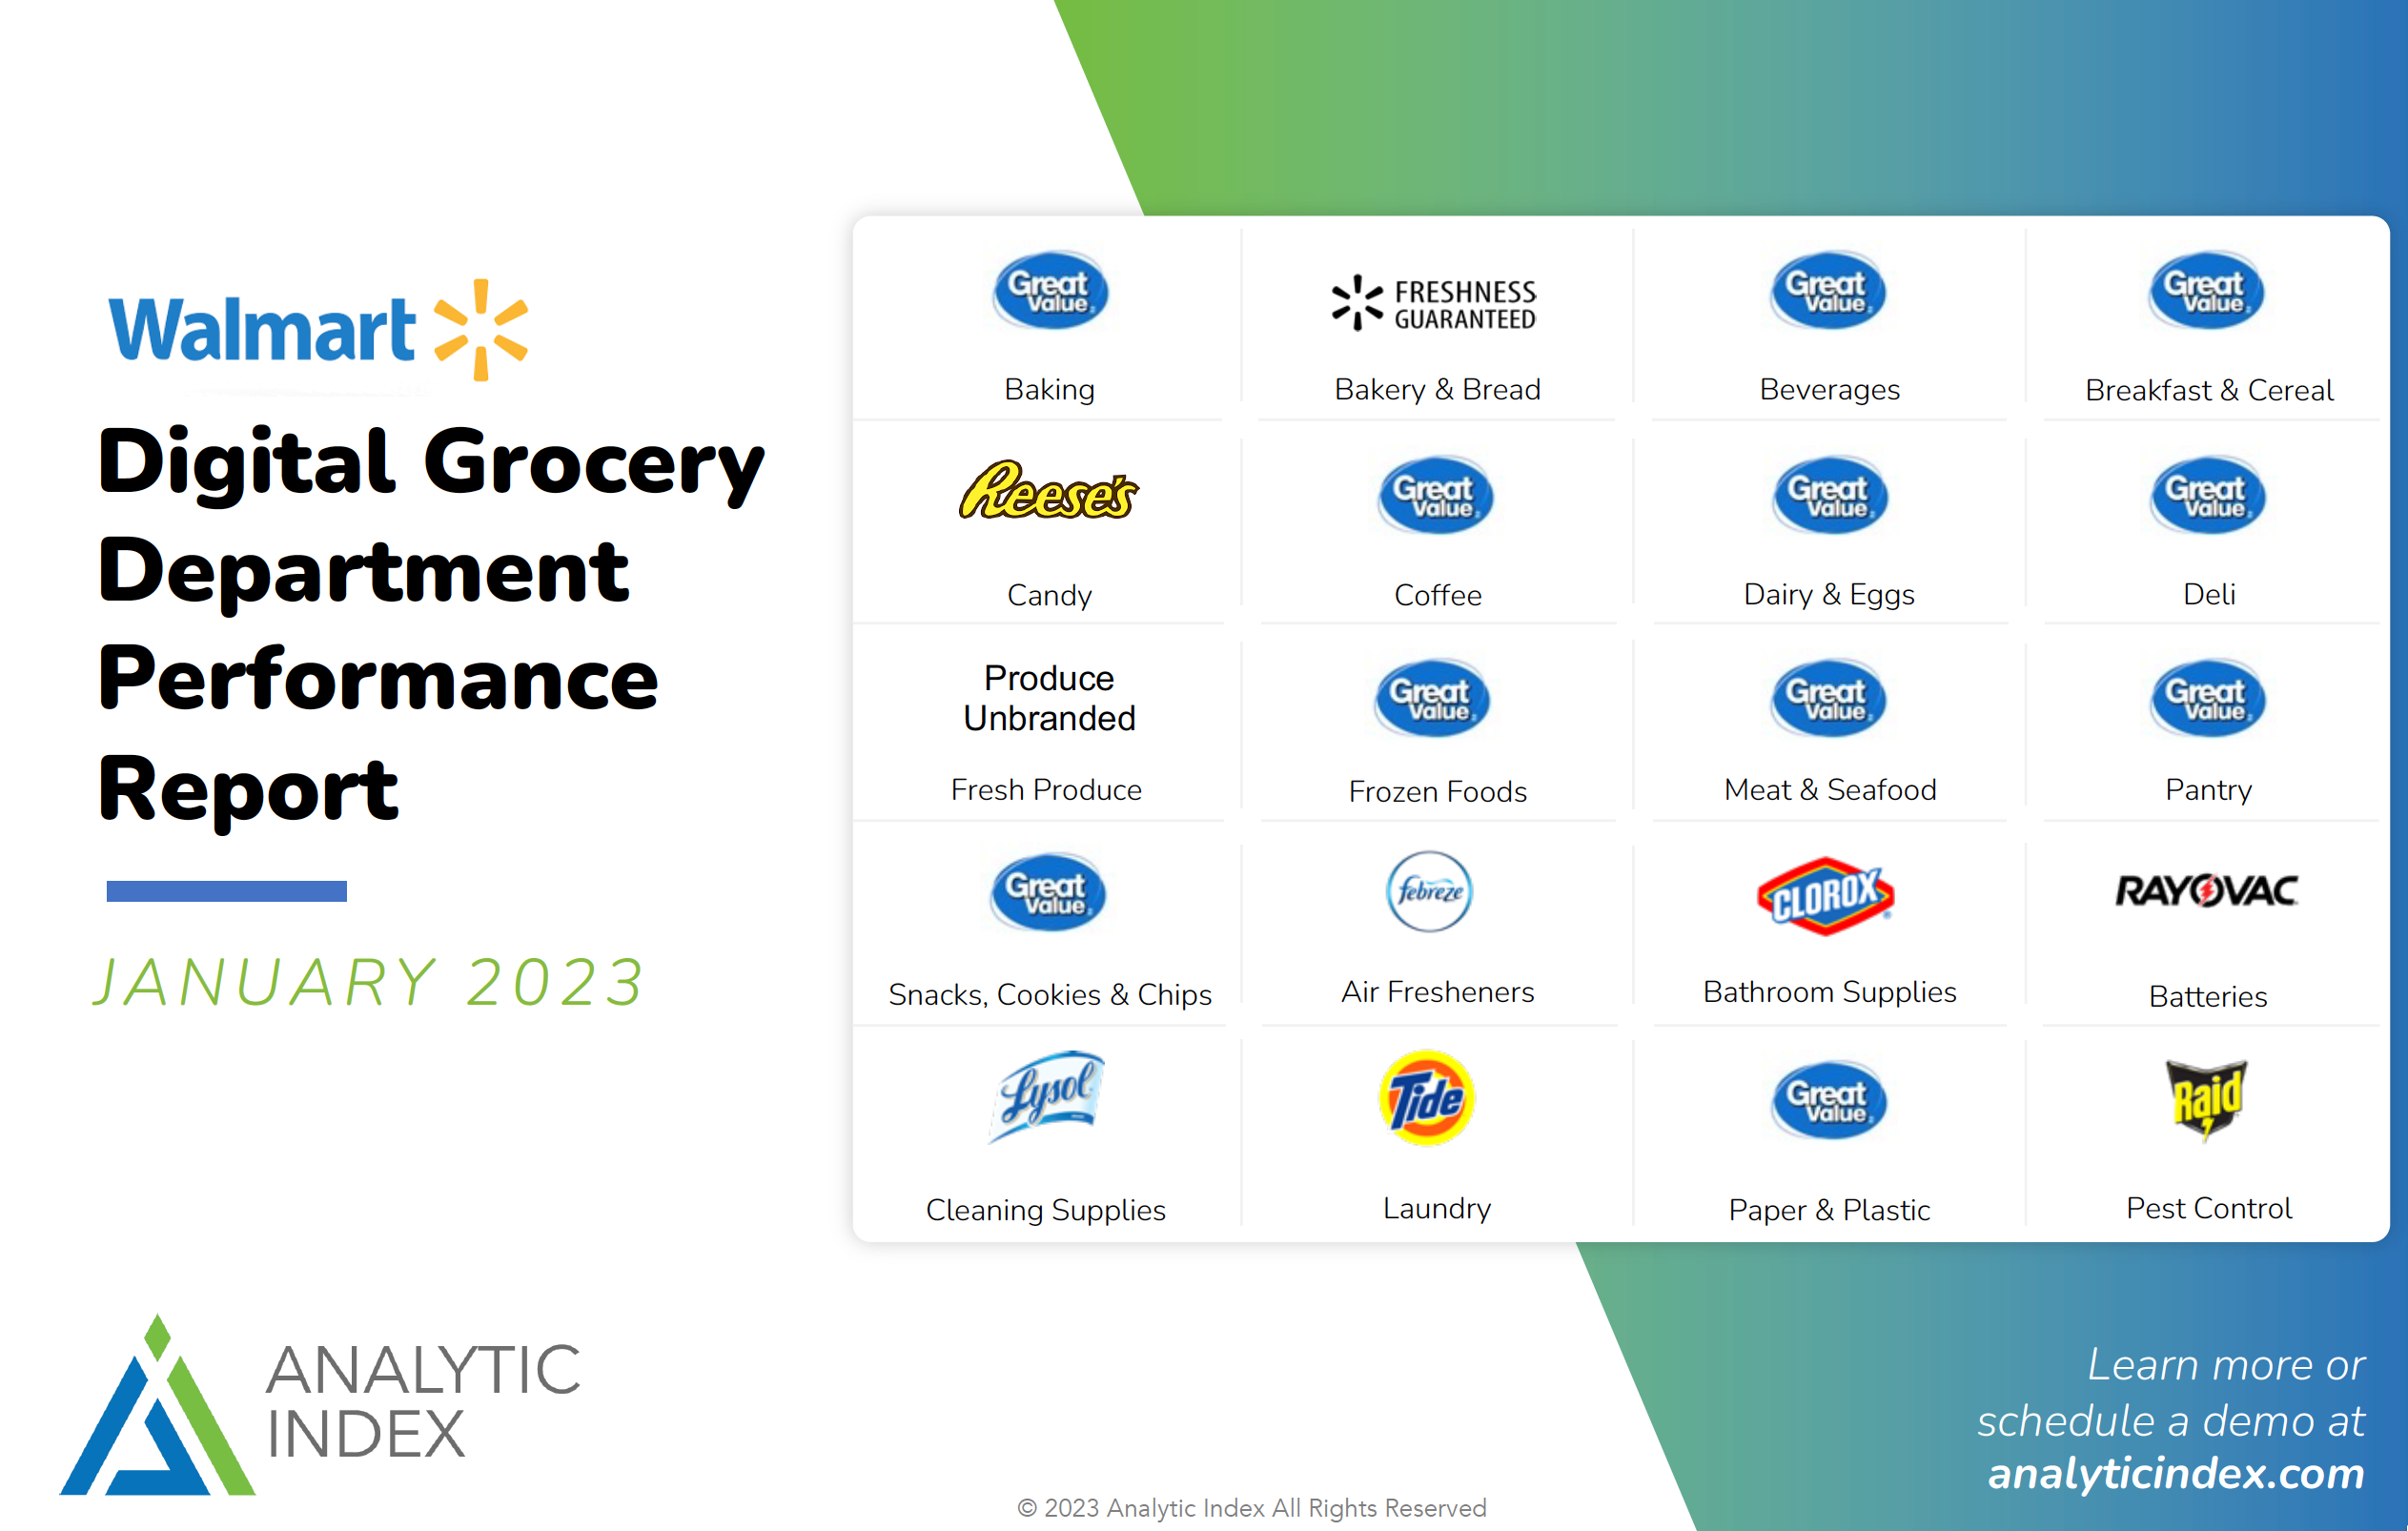 Analytic_Index_-_Walmart_Digital_Grocery_-_January_2023_Performance_pdf